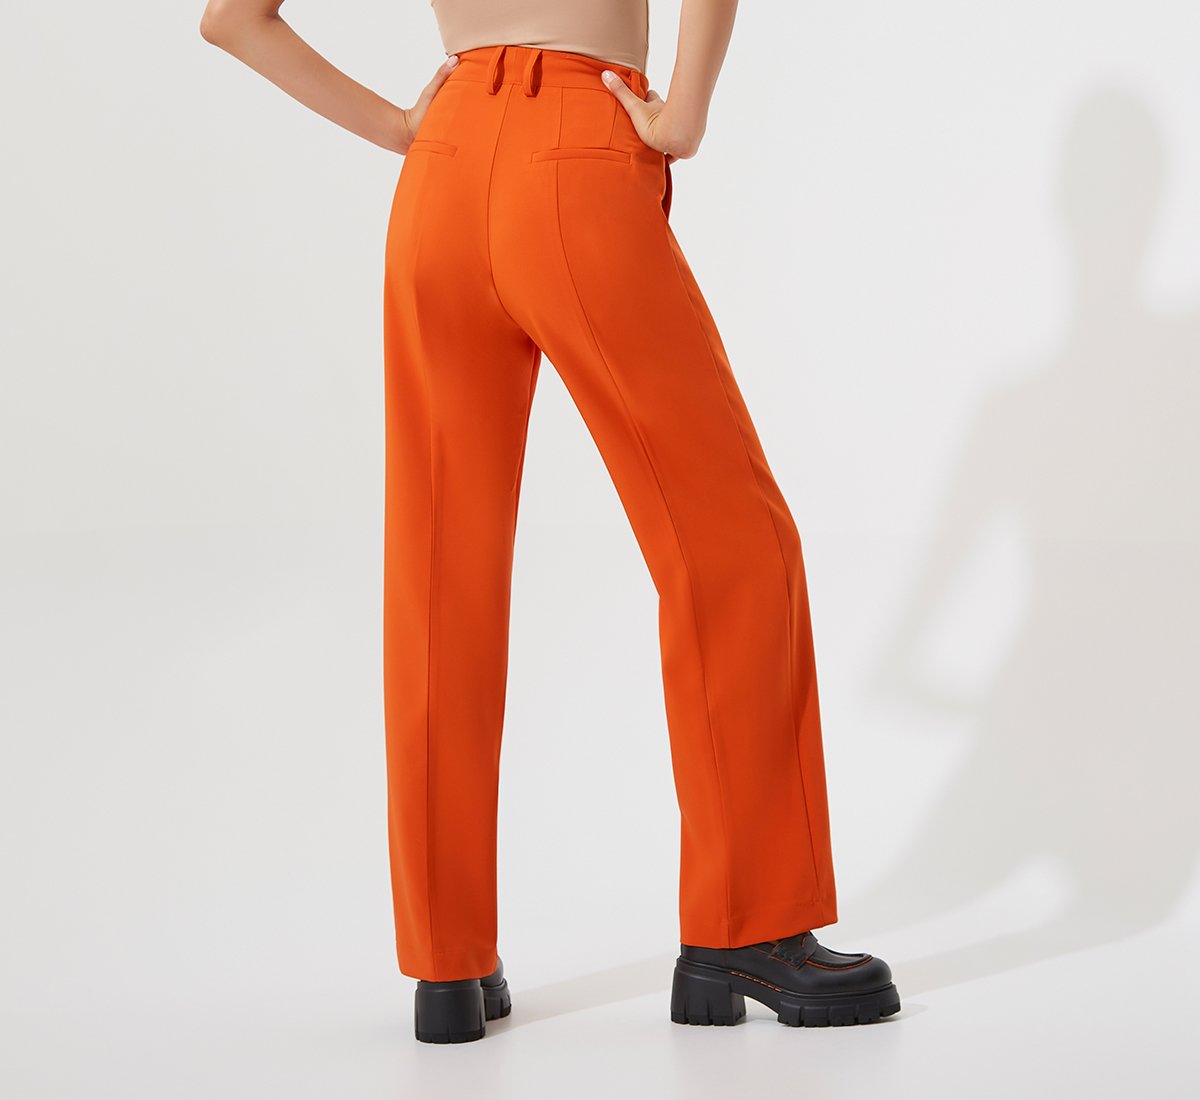 Pantalone arancione slim fit